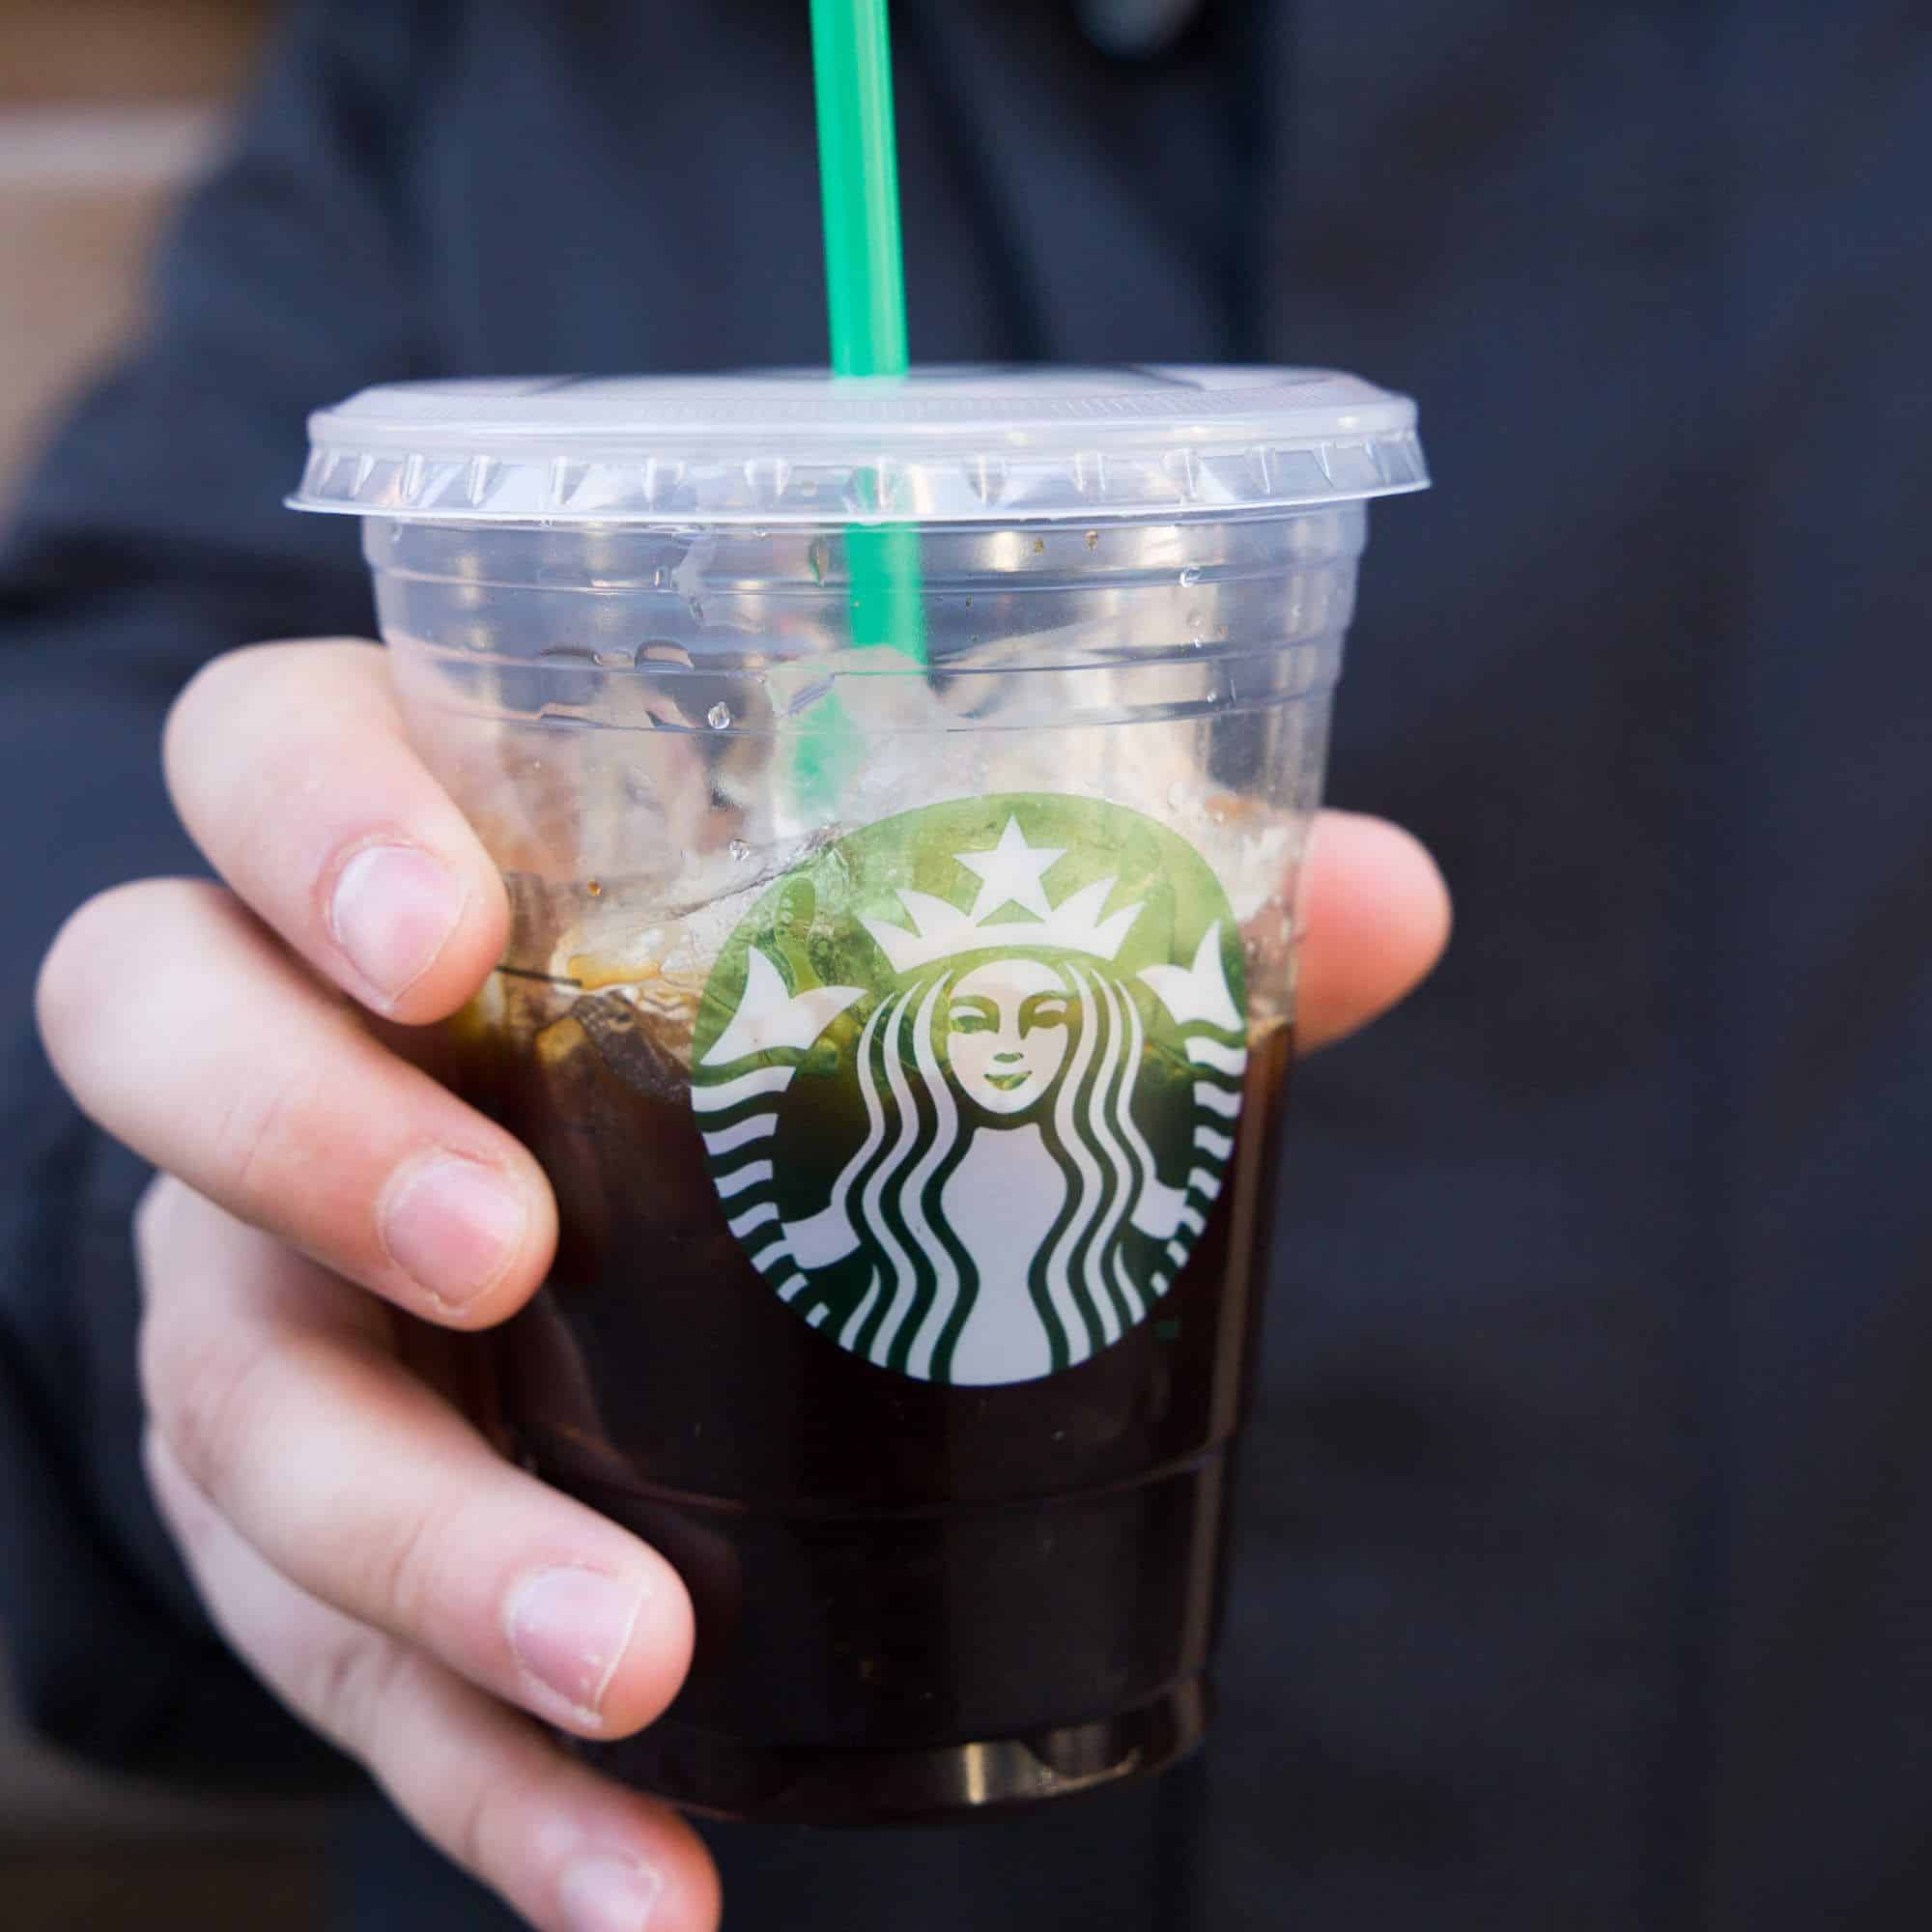 Stunning What Starbucks Drink Has The Most Caffeine